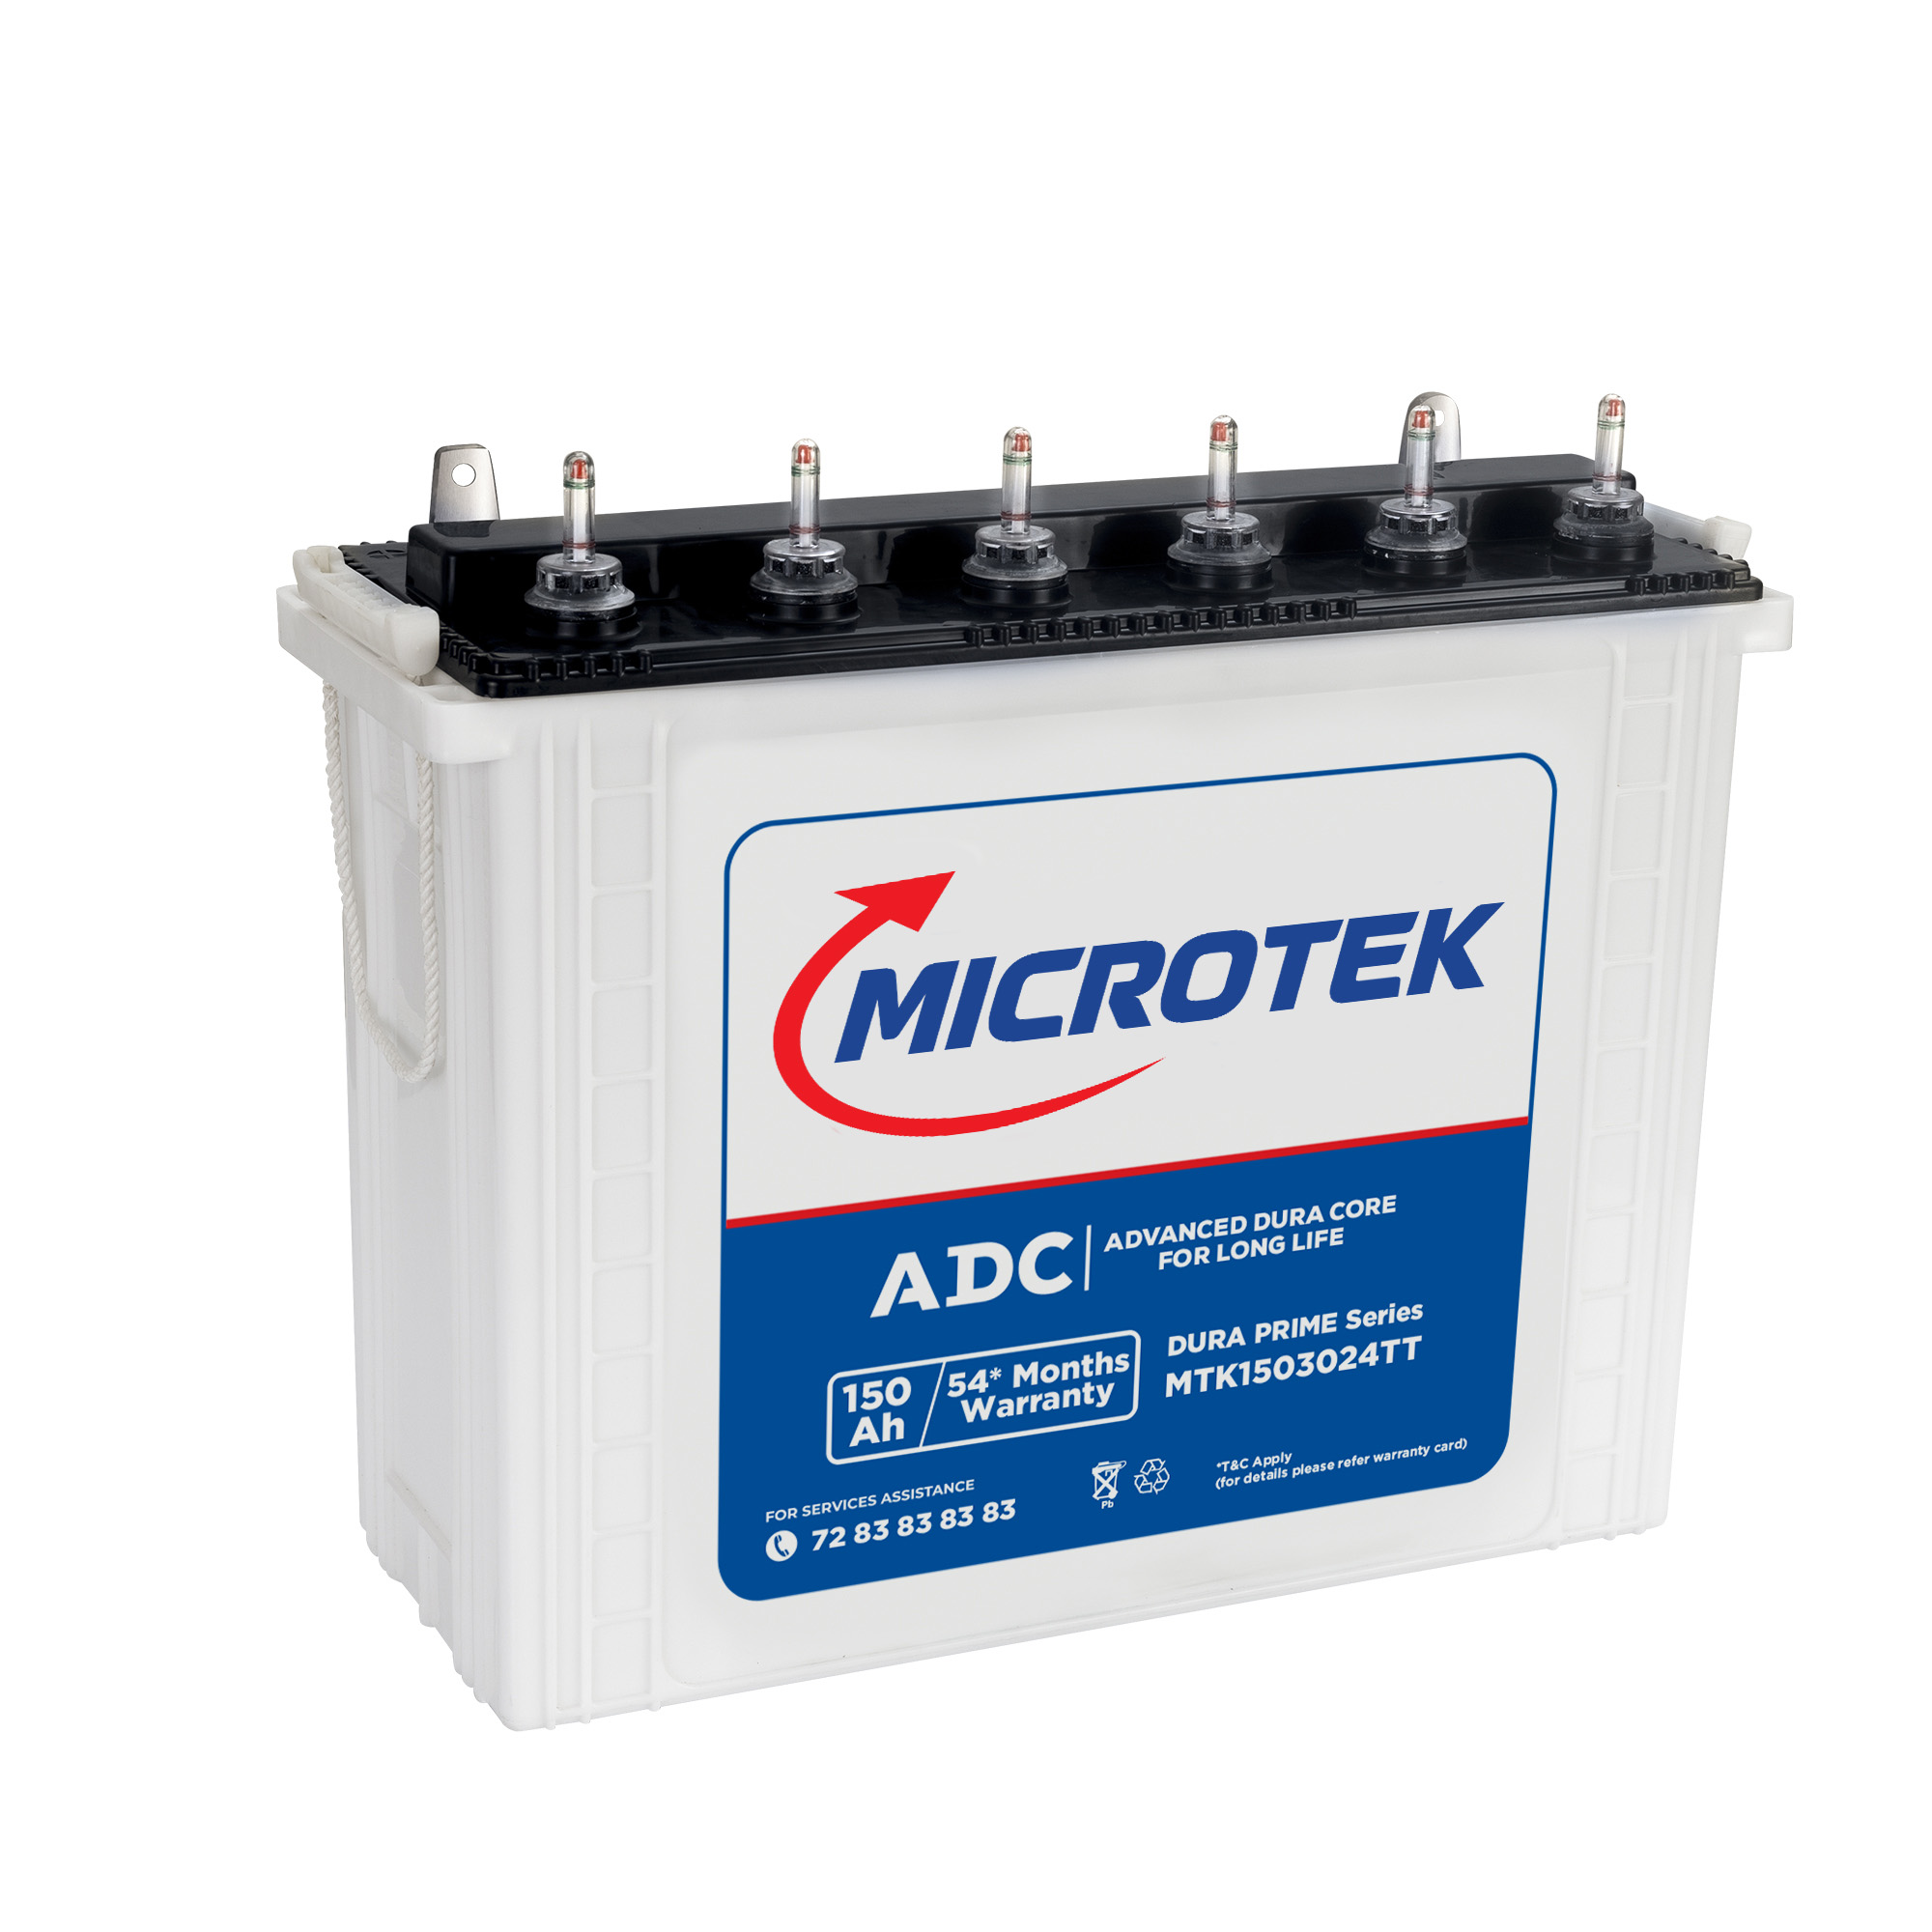 Microtek Dura Prime MTK1503024TT 150Ah/12V Inverter Battery With Advanced Dura Core Technology